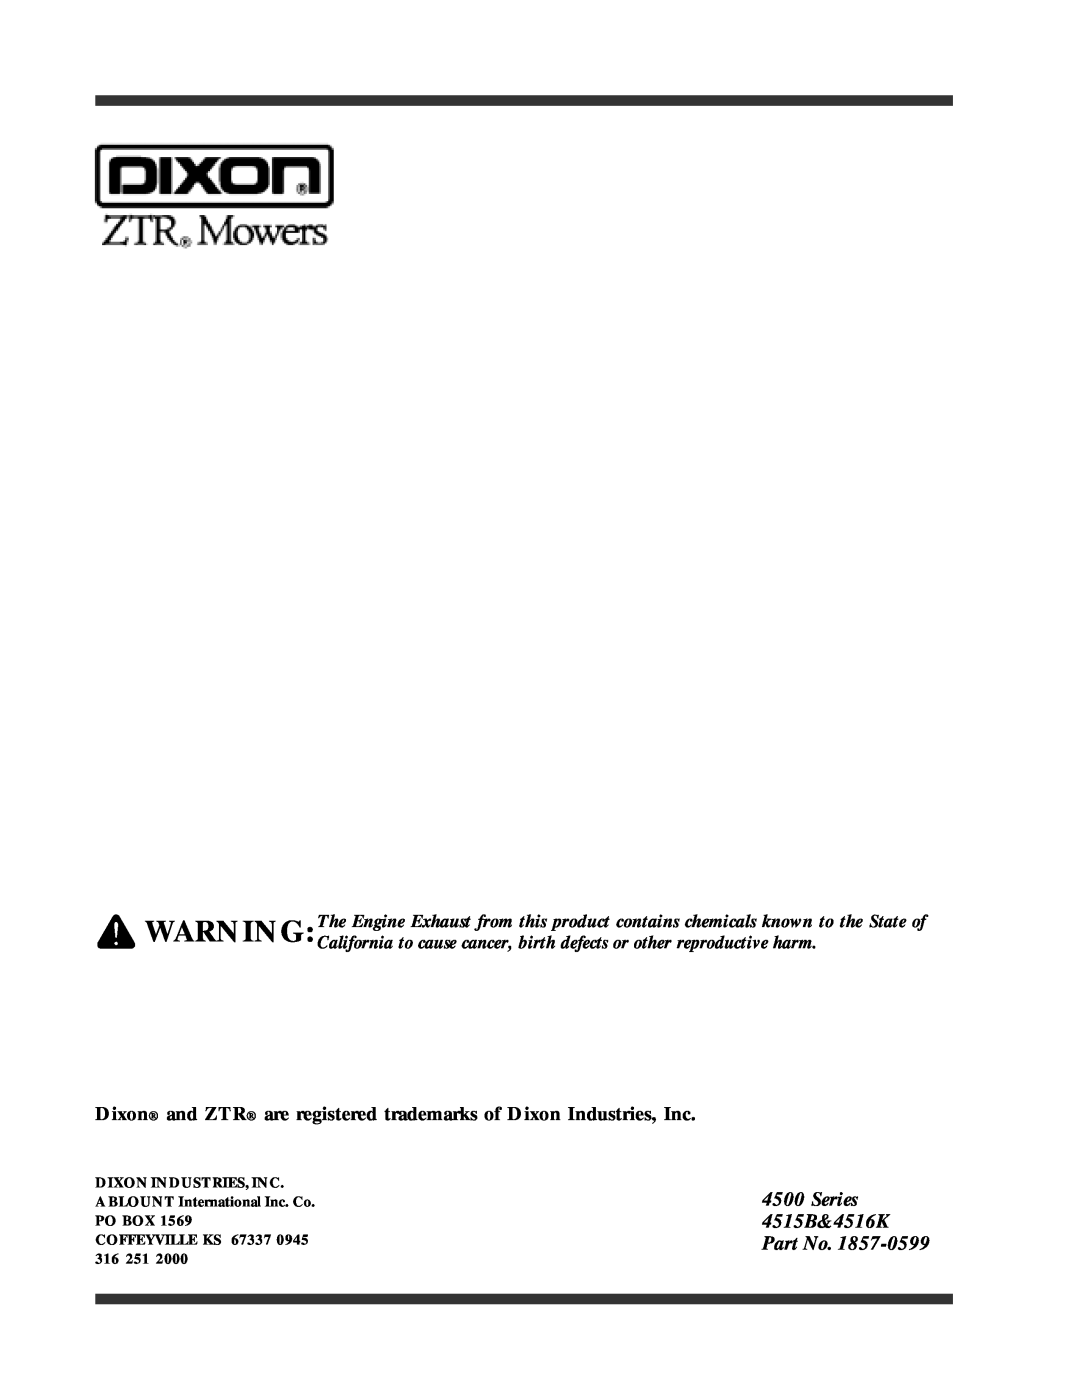 Dixon 1857-0599 manual Dixon and ZTR are registered trademarks of Dixon Industries, Inc, Series 4515B&4516K Part No 